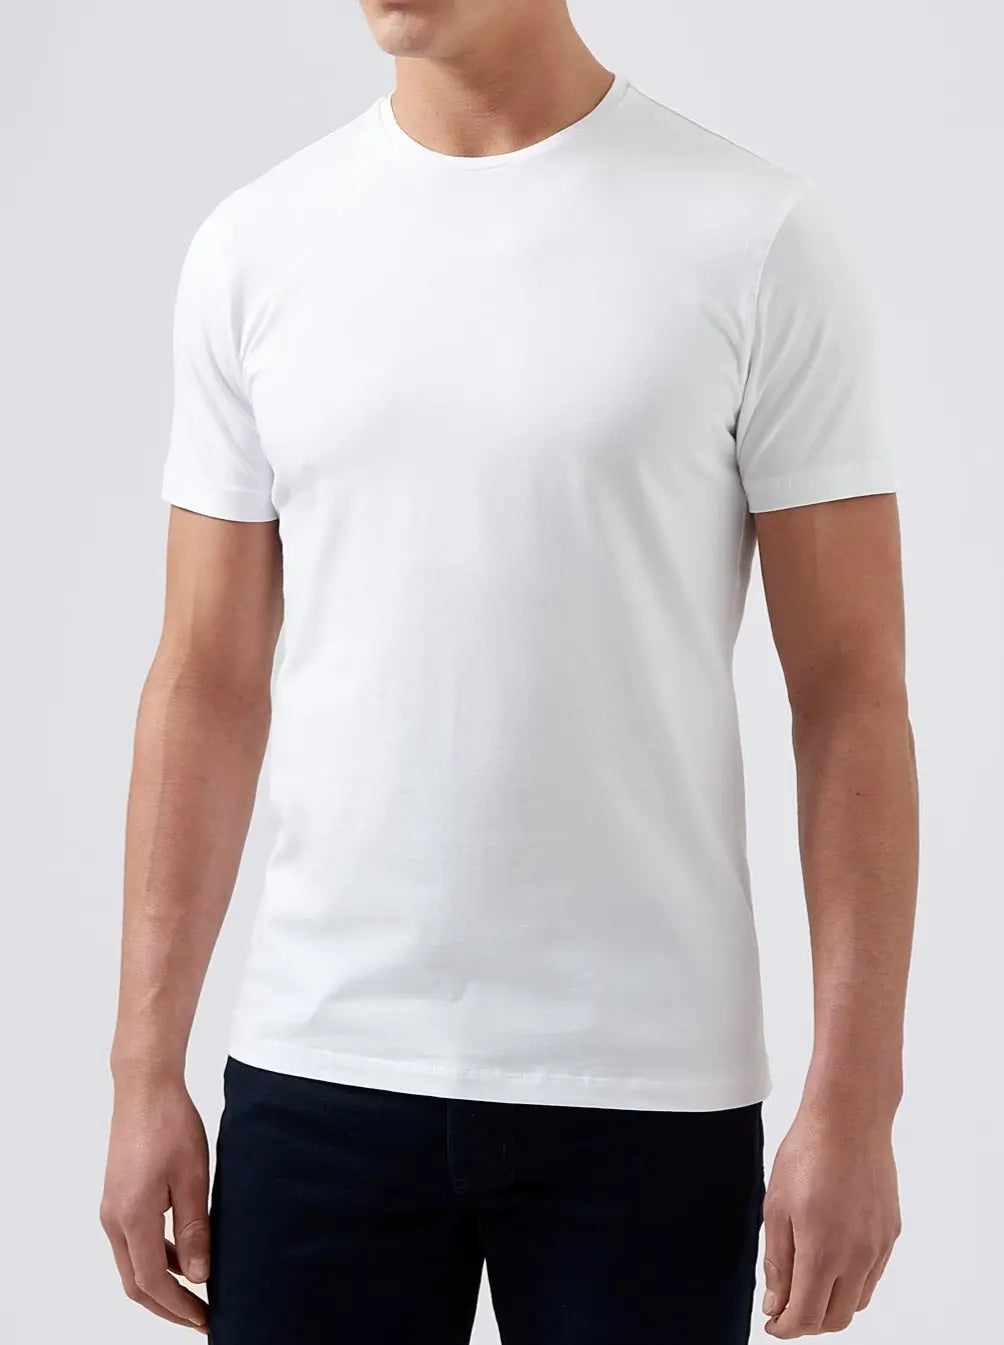 Remus Uomo White Crew-Neck T-Shirt From Woven Durham